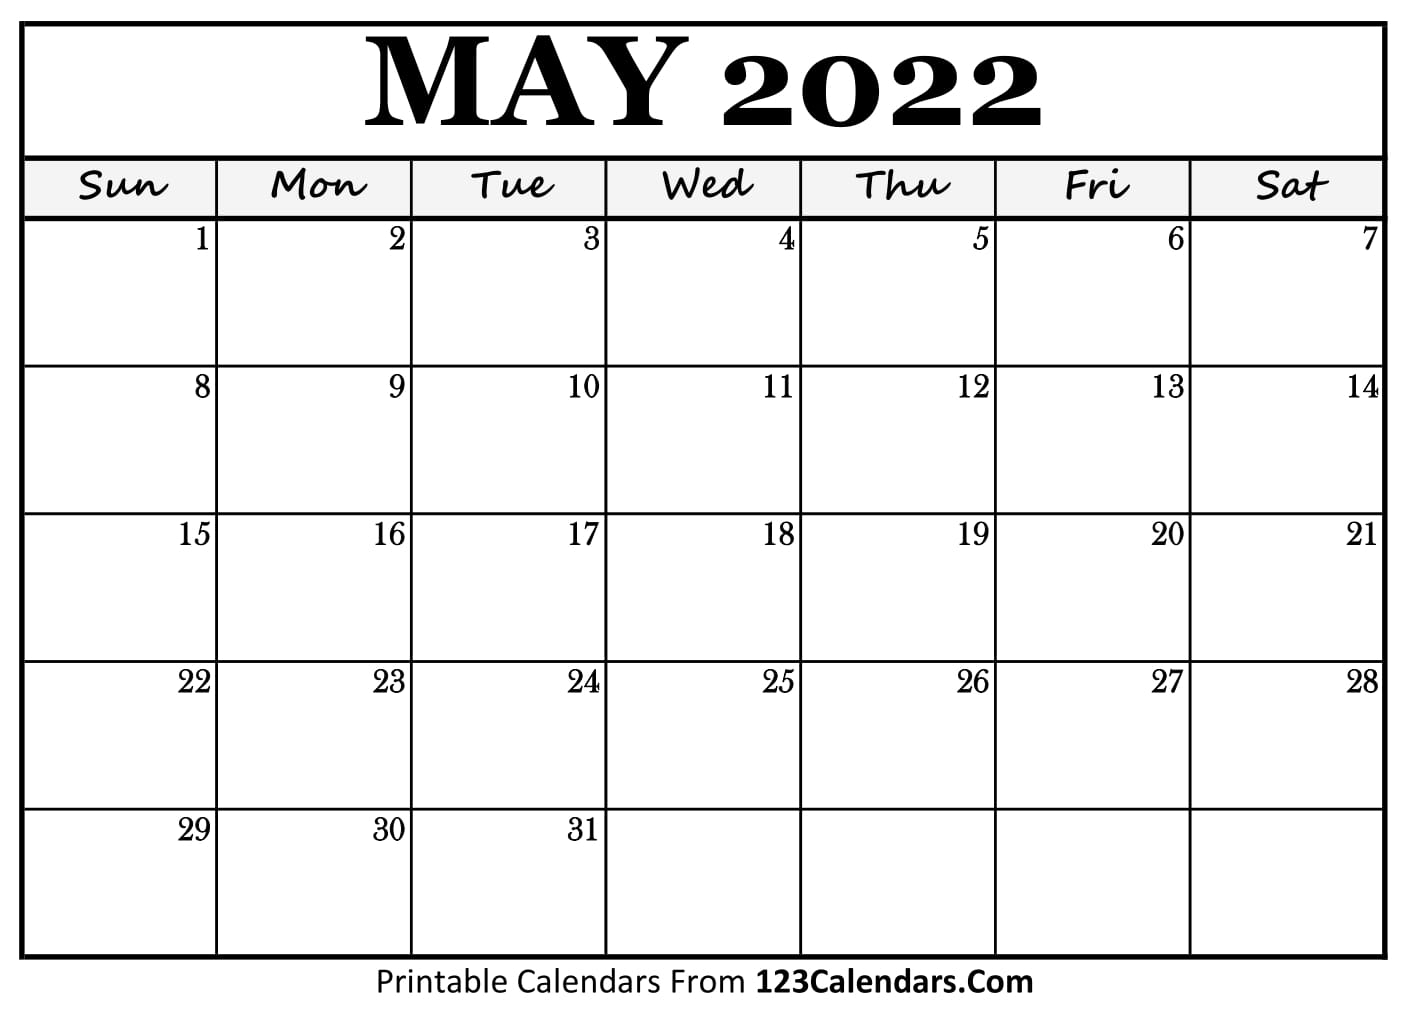 May Printable Calendar 2022 Printable May 2022 Calendar Templates - 123Calendars.com